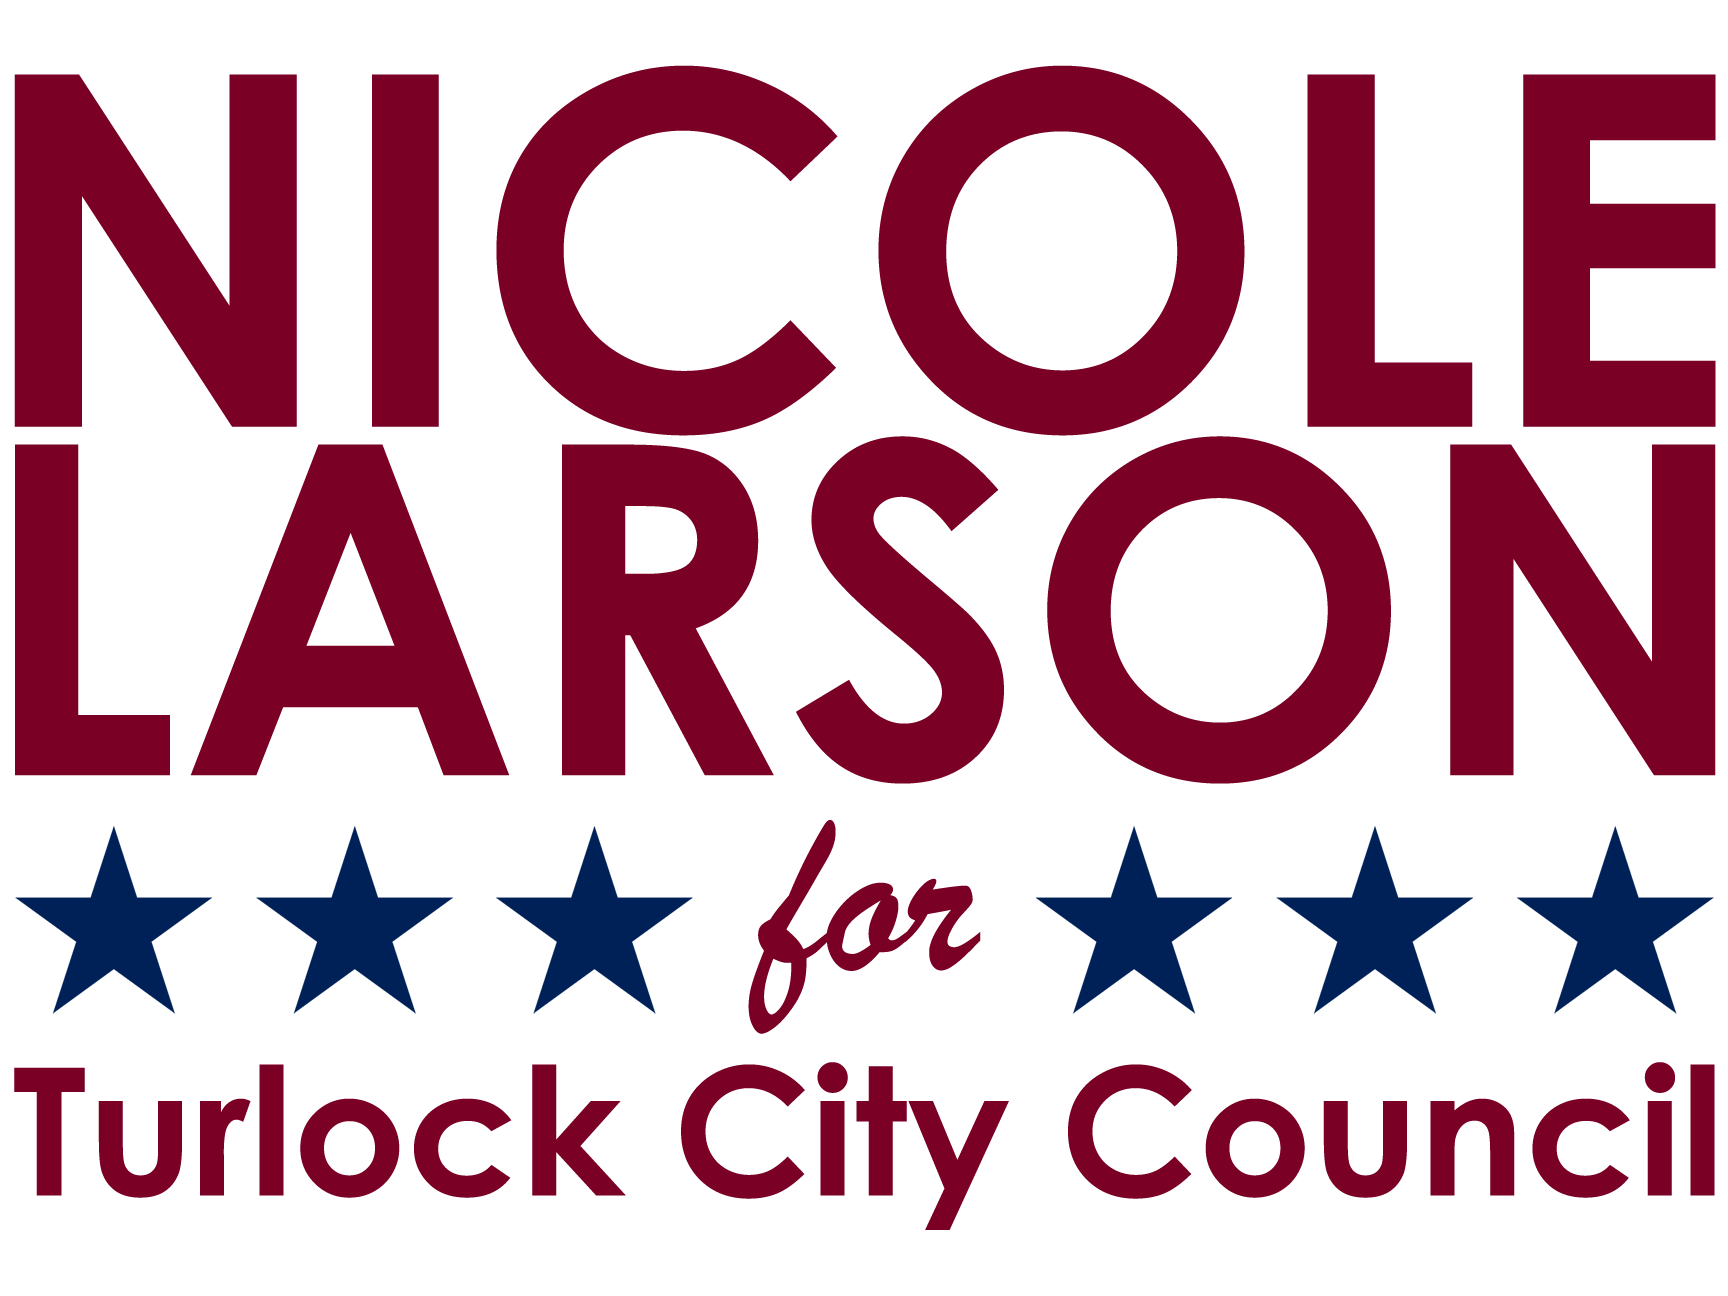 Larson for Turlock City Council 2018